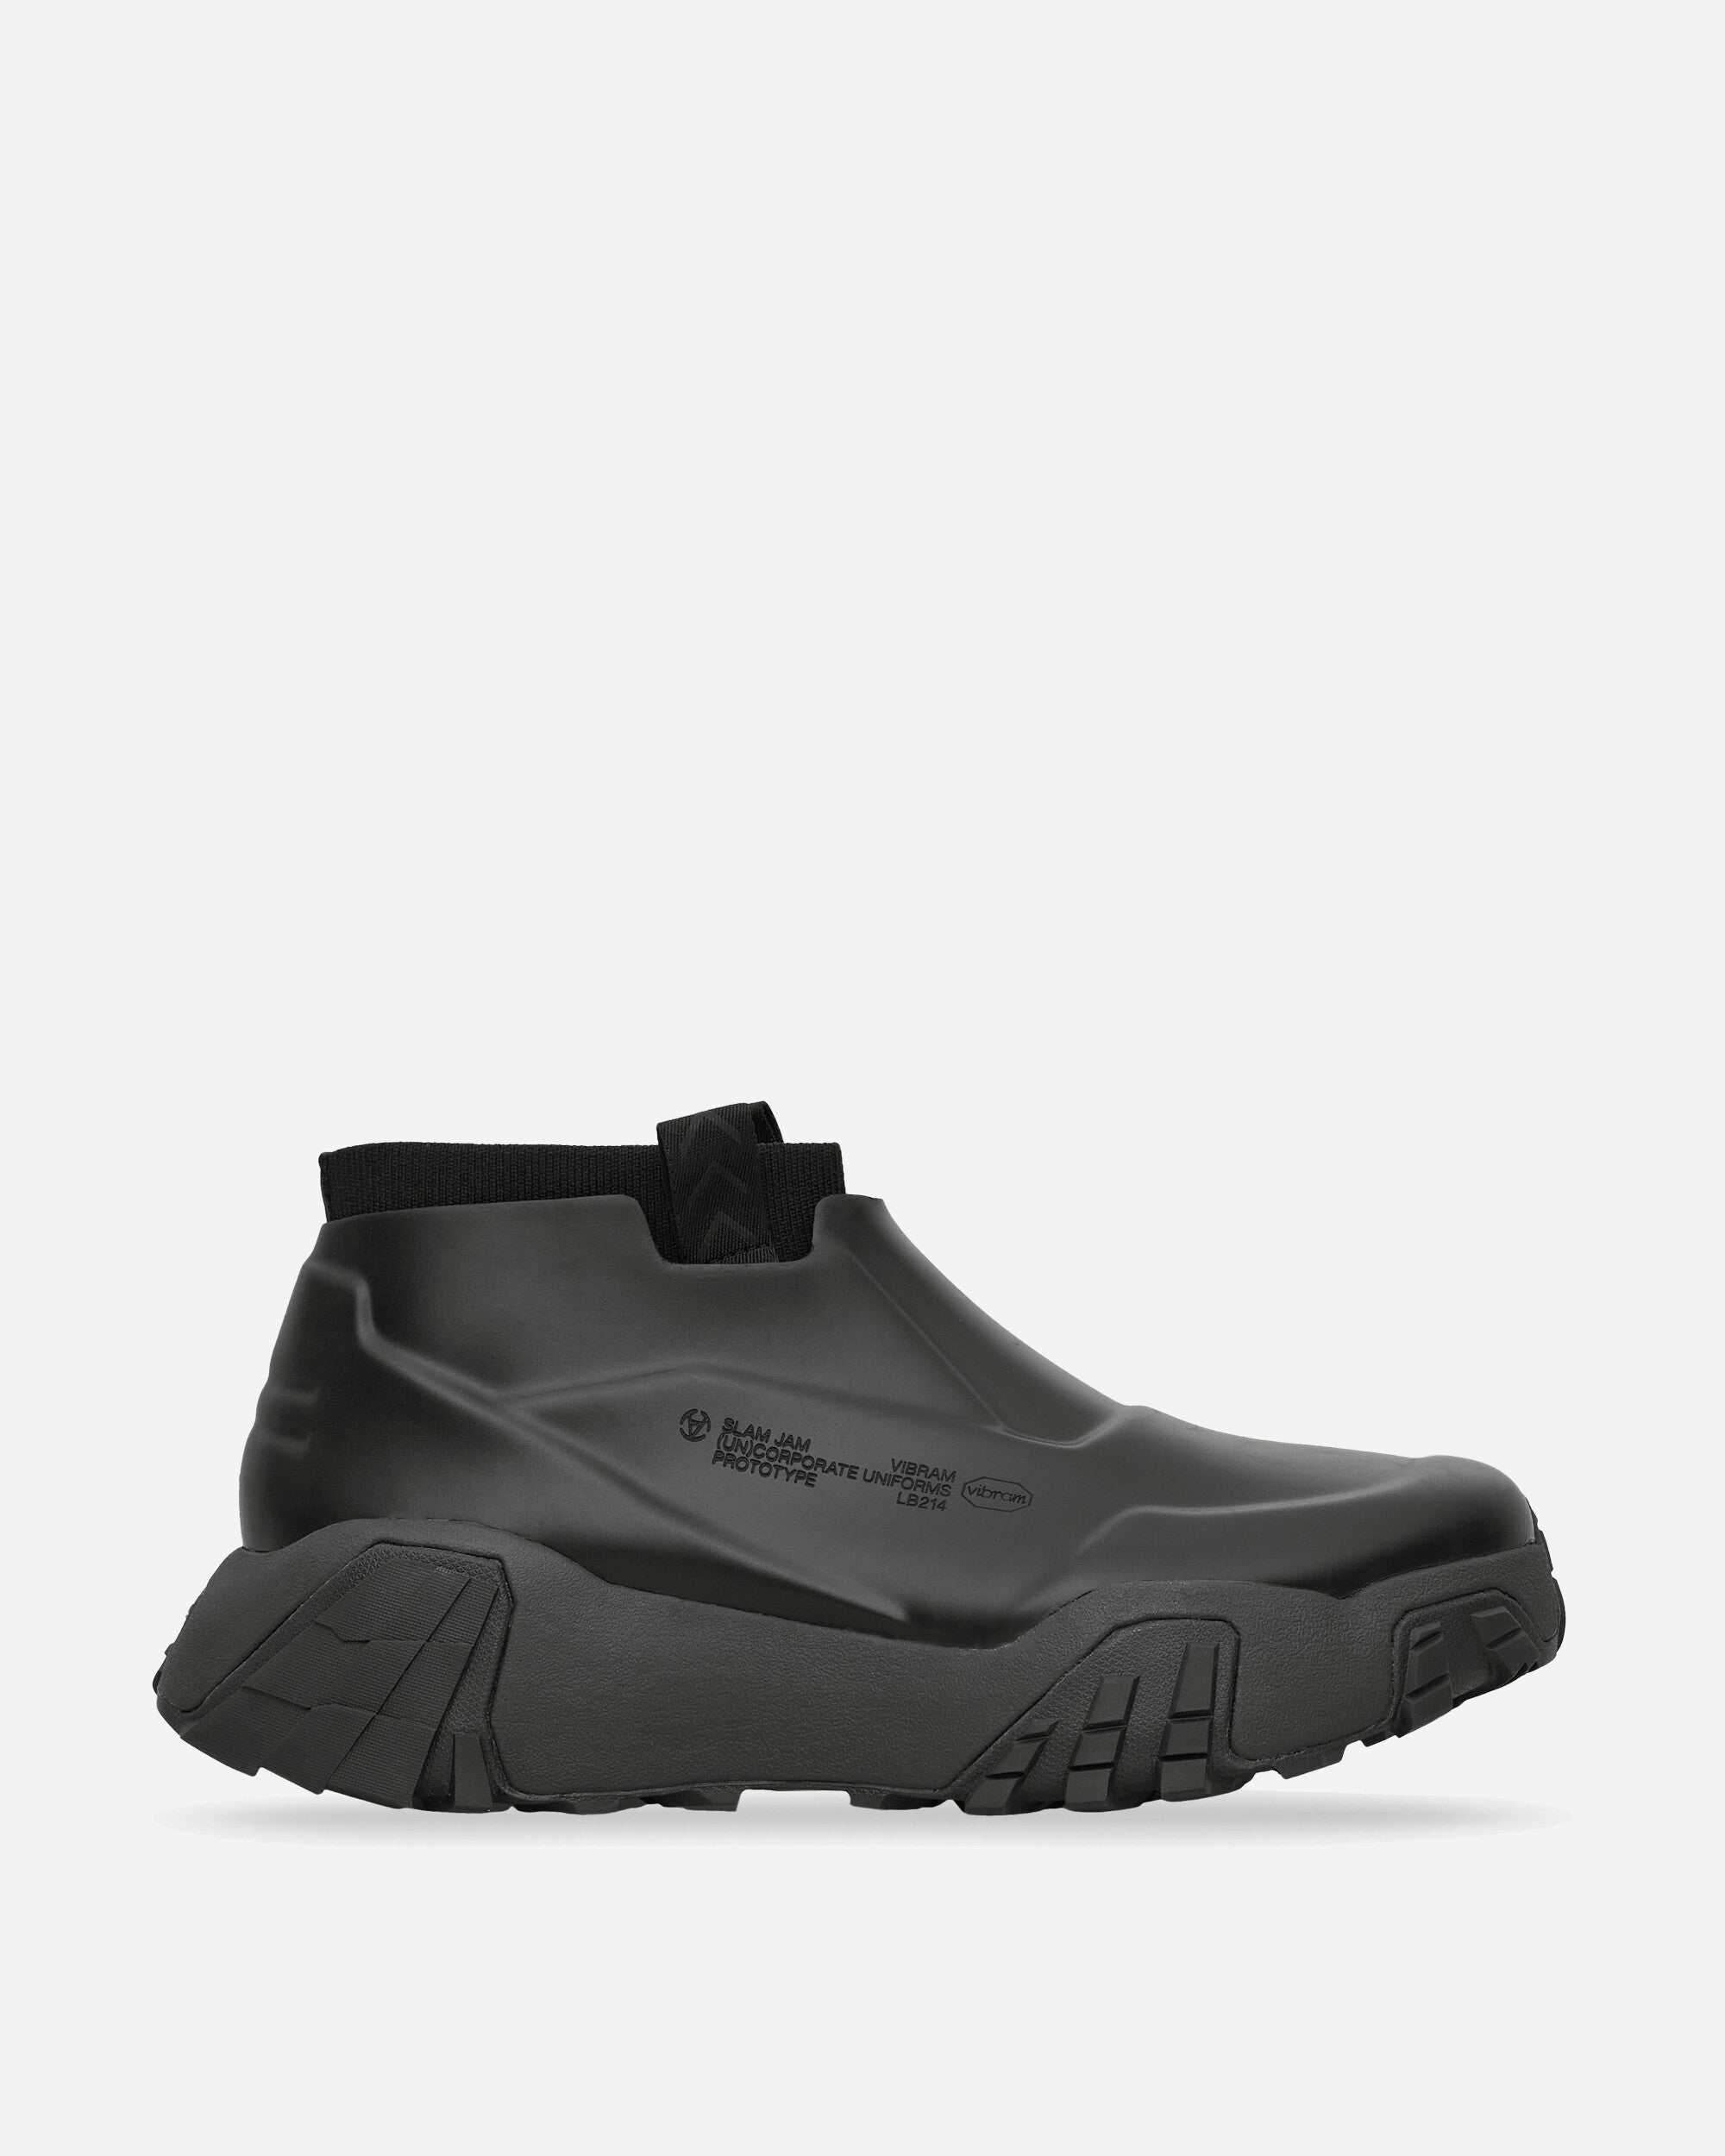 Vibram LB214 Post Sneakers Black